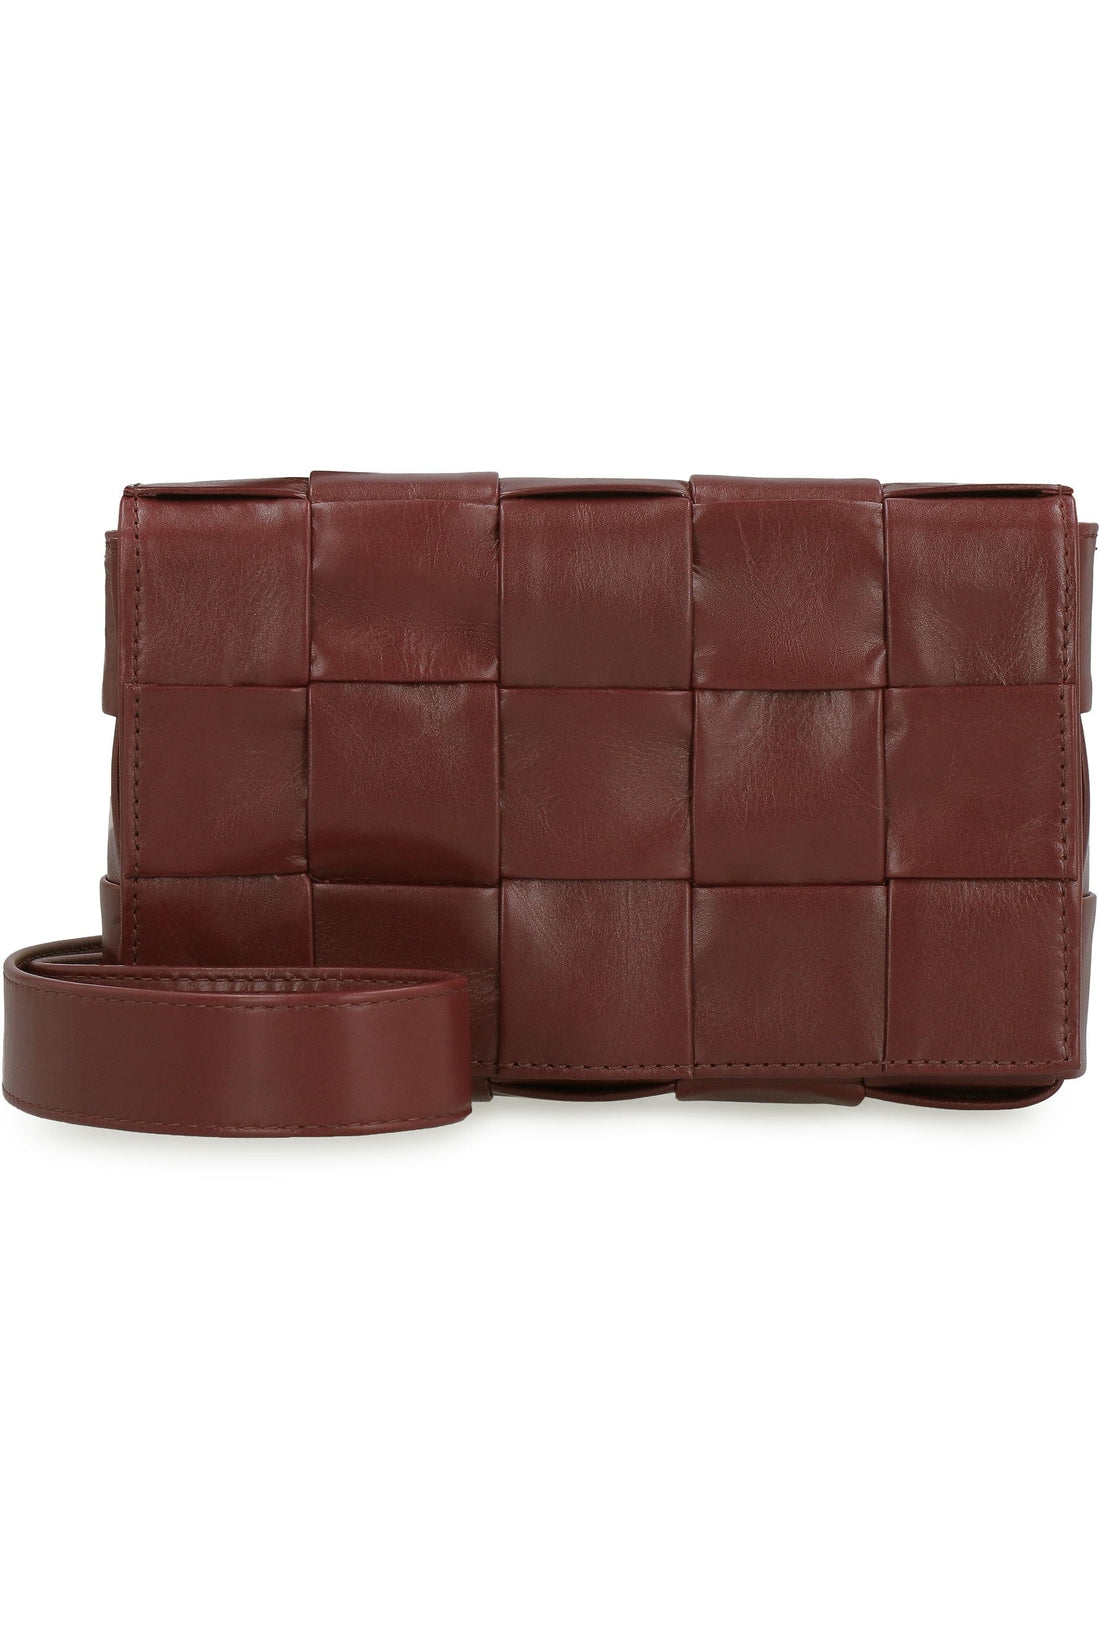 Bottega Veneta-OUTLET-SALE-Cassette leather mini crossbody bag-ARCHIVIST